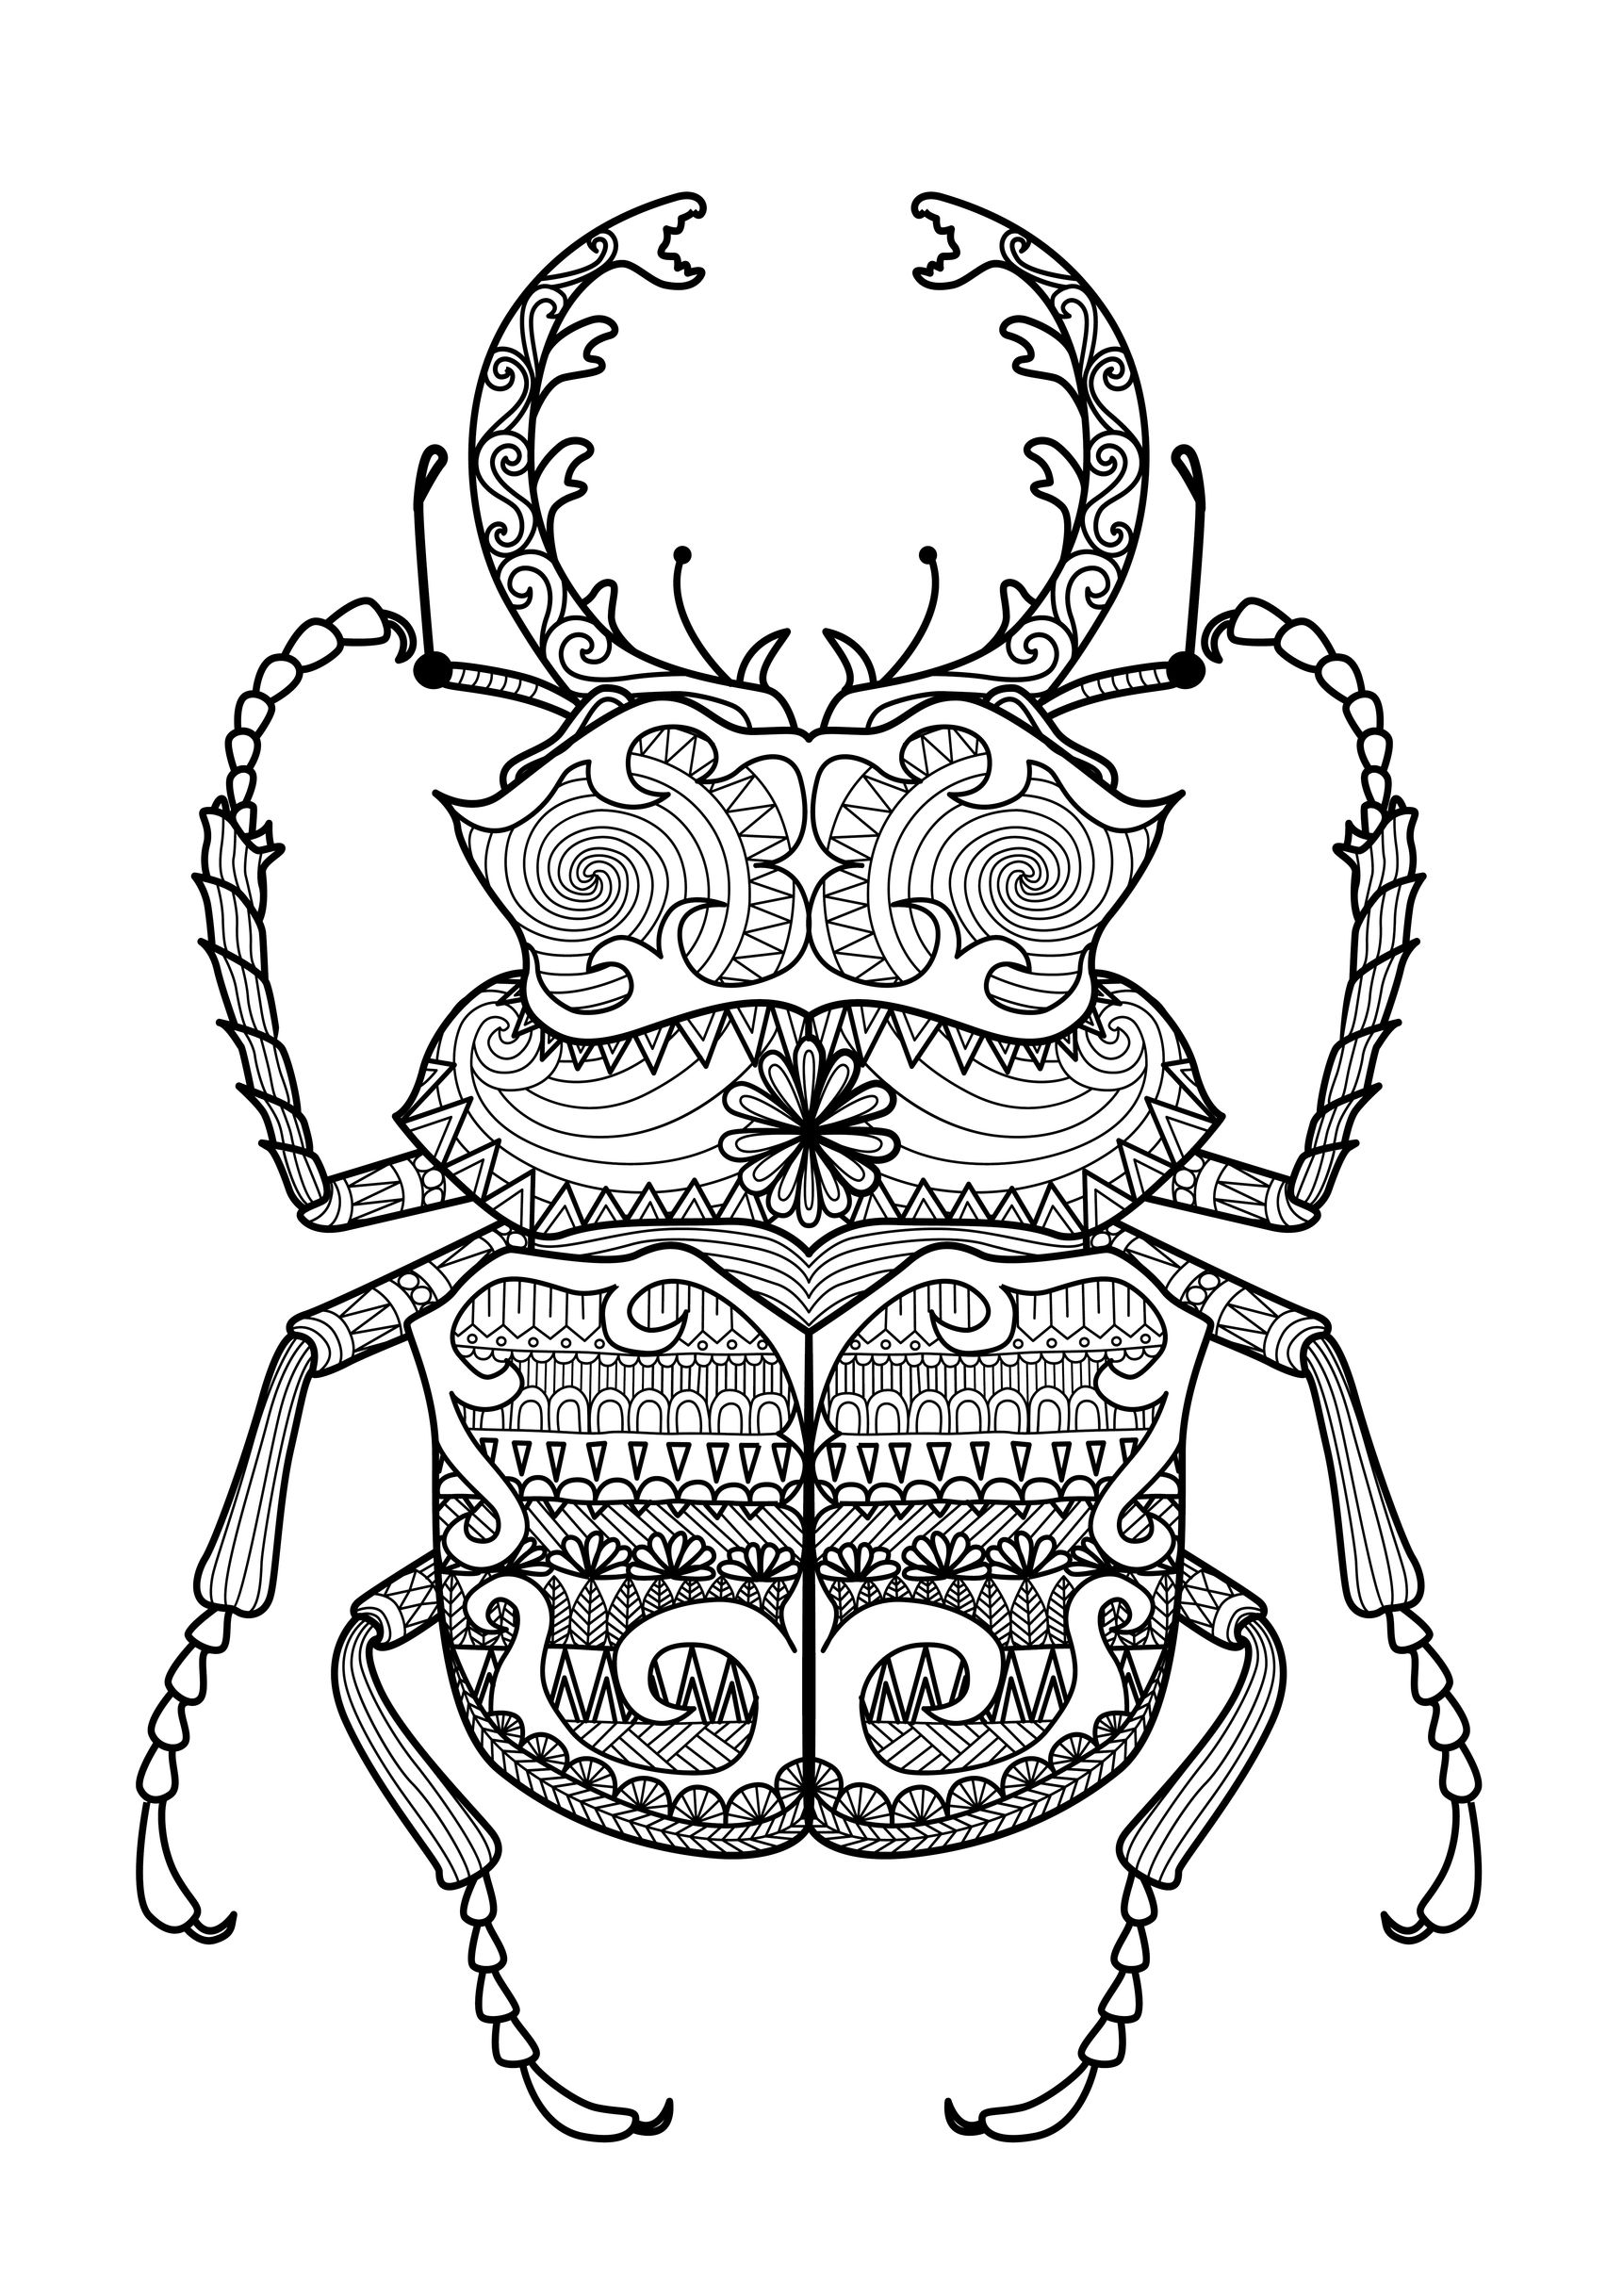 Le scarabée ! Un magnifique coloriage complexe, par Bimdeedee